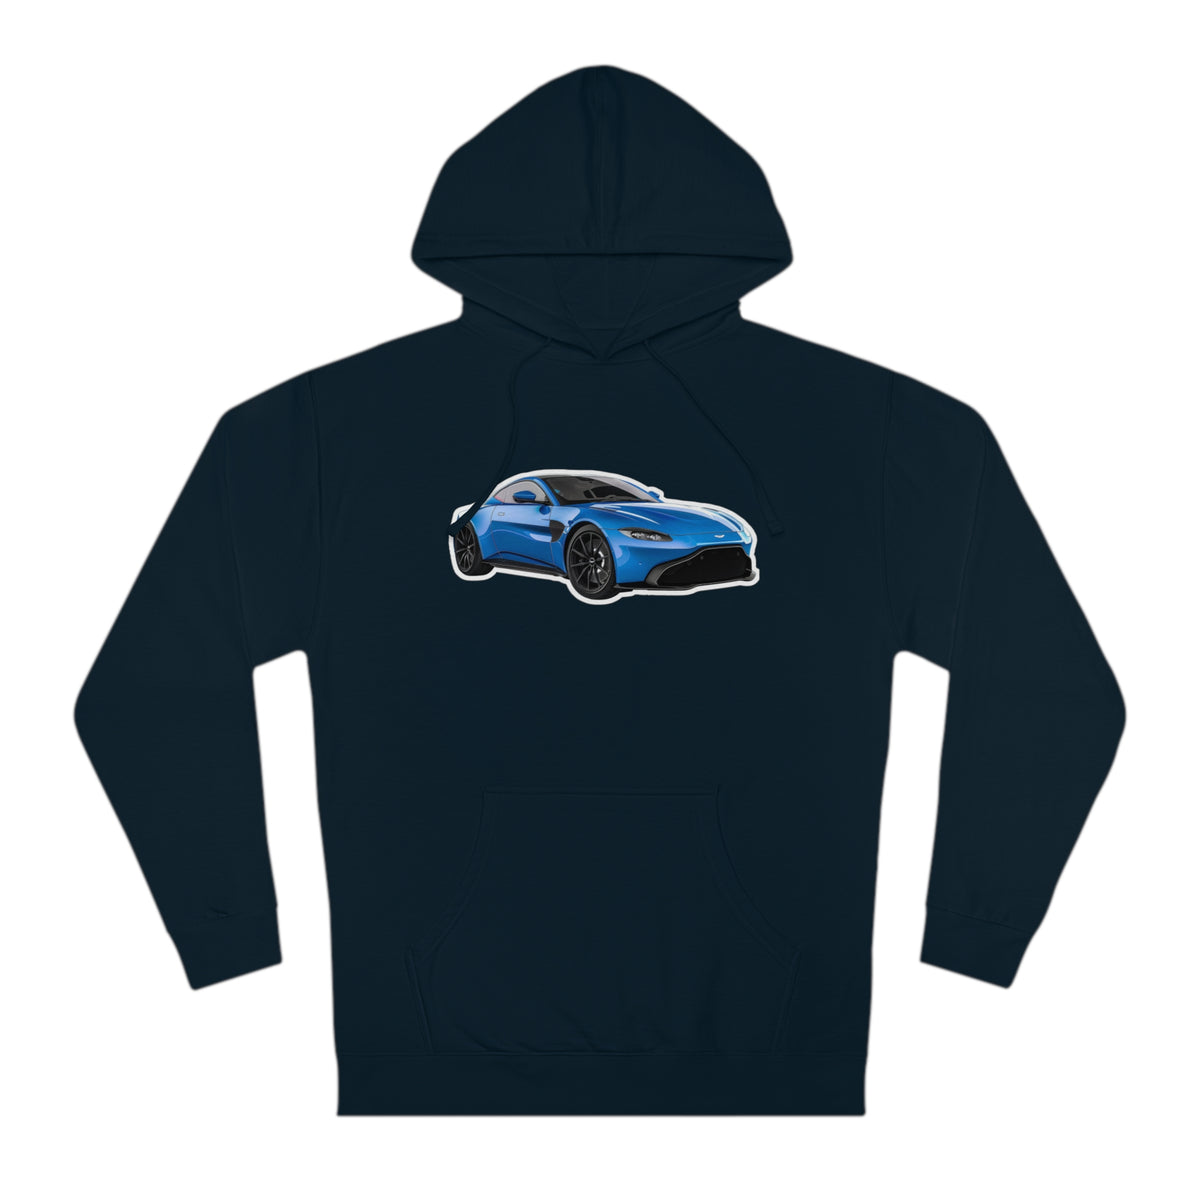 Azure Adrenaline Men's Hoodie with Aston Martin Graphic Hooded Sweatshirt